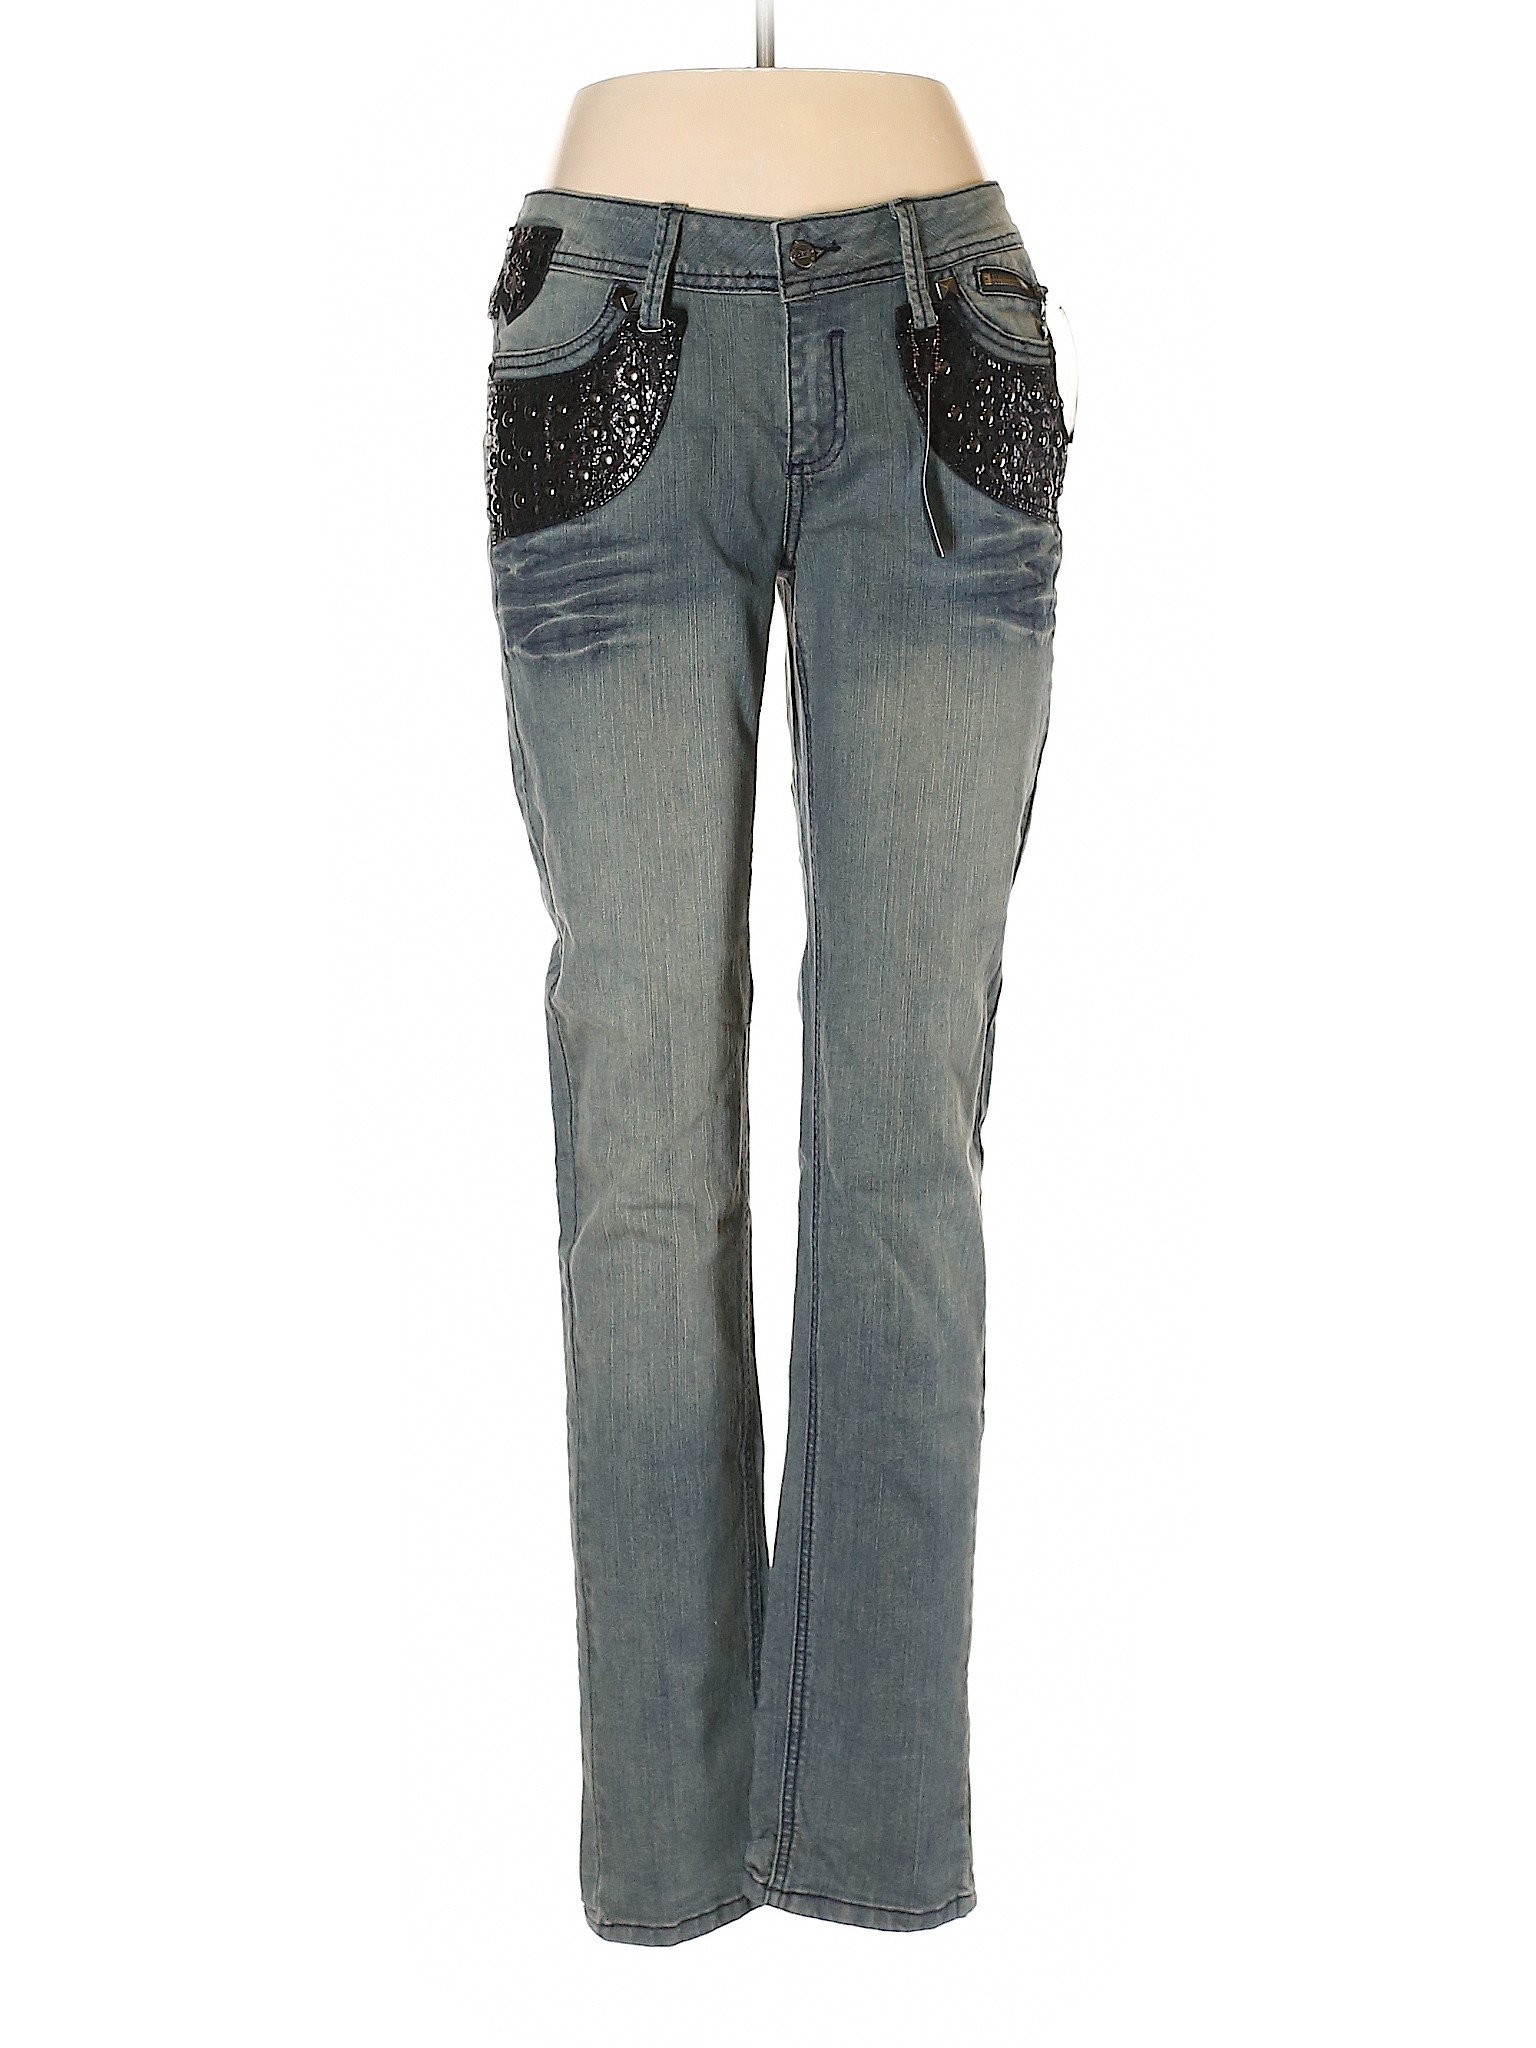 NWT Dereon Women Blue Jeans 11 | eBay